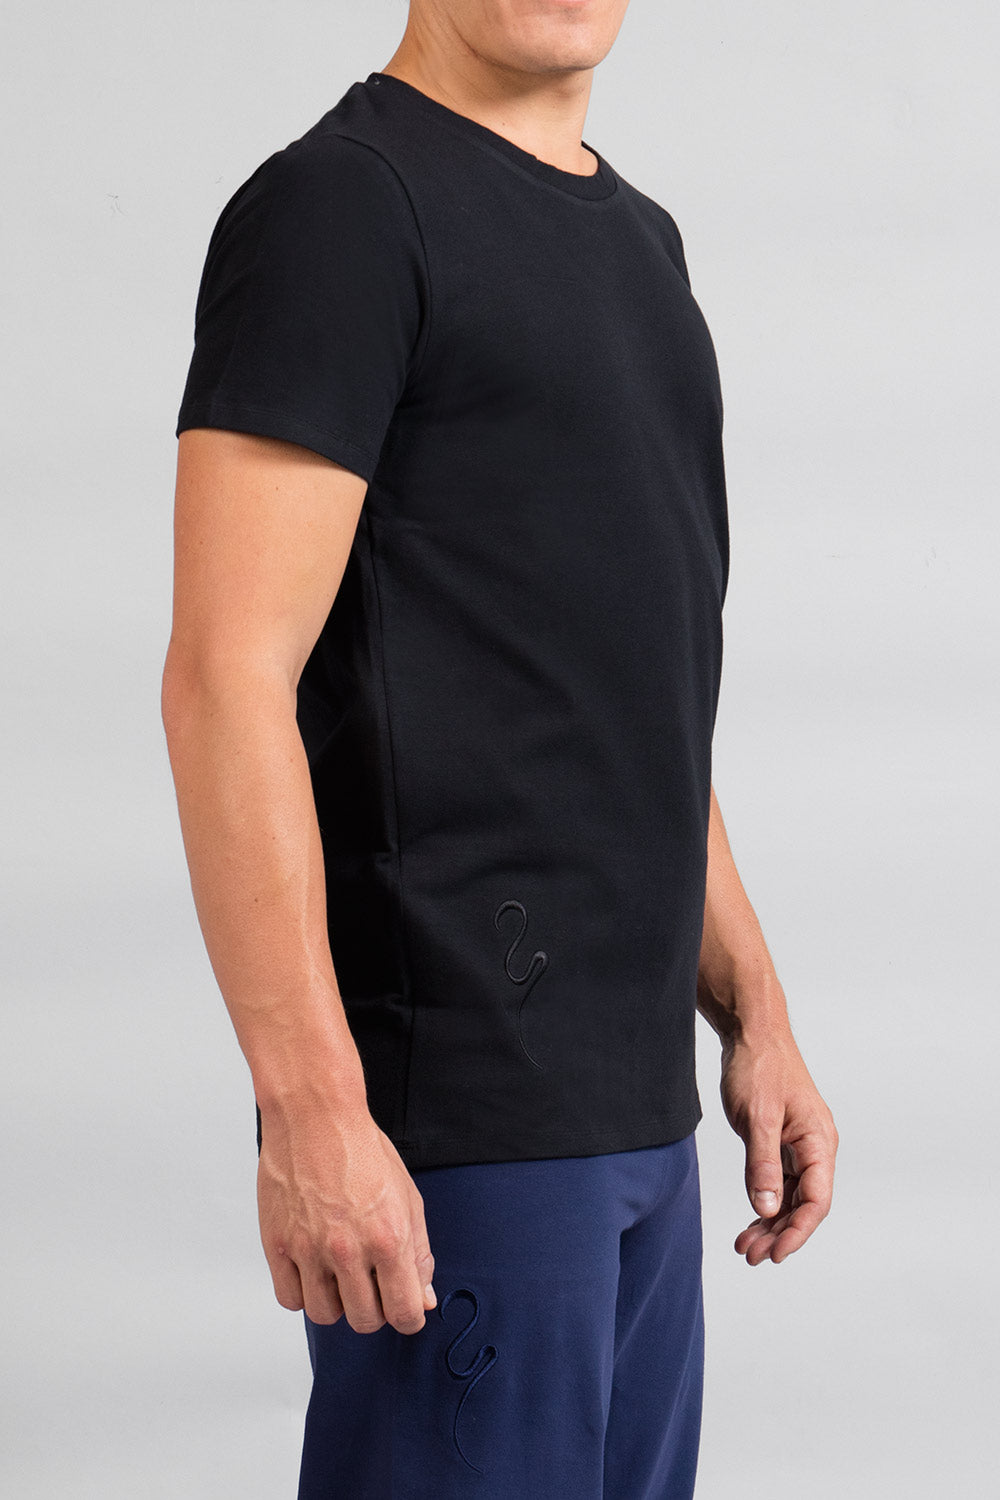 Yoga T-shirt for men organic cotton breath of fire yogafashion